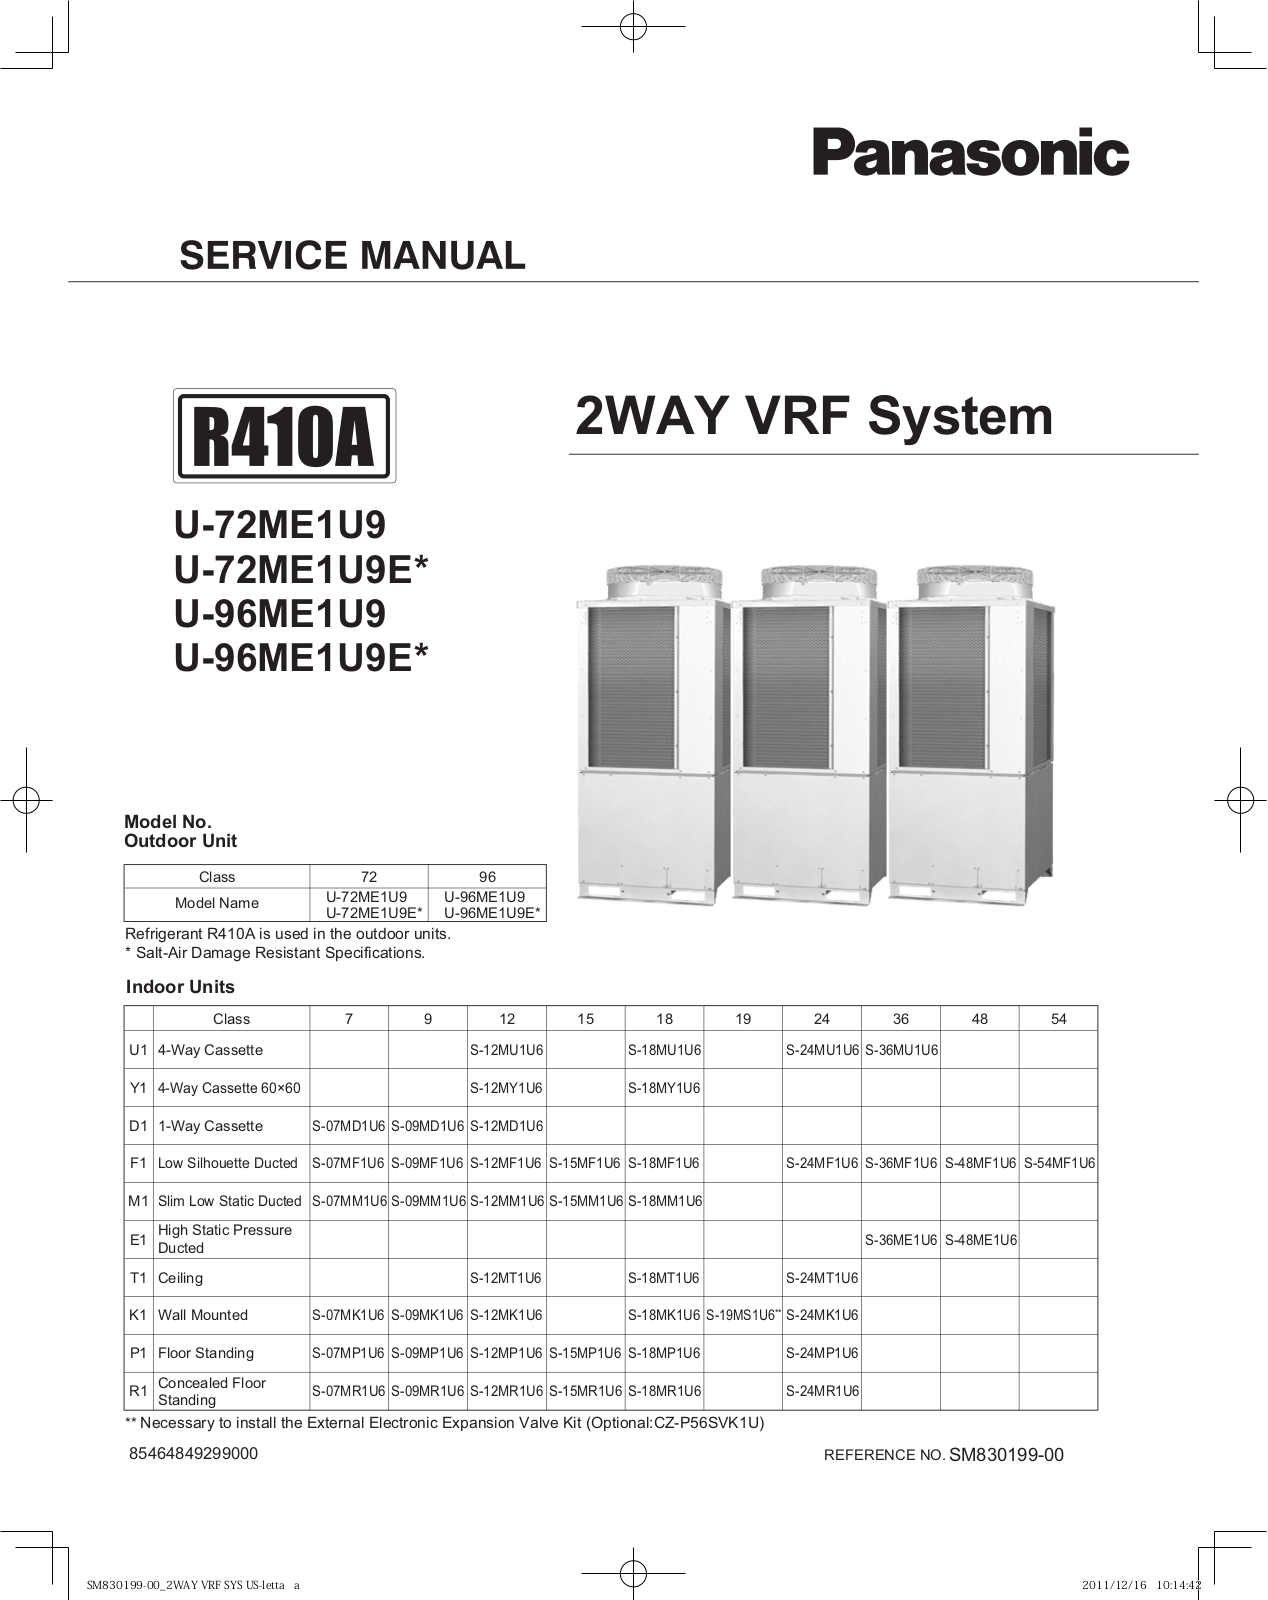 Panasonic 2-Way Service Manual